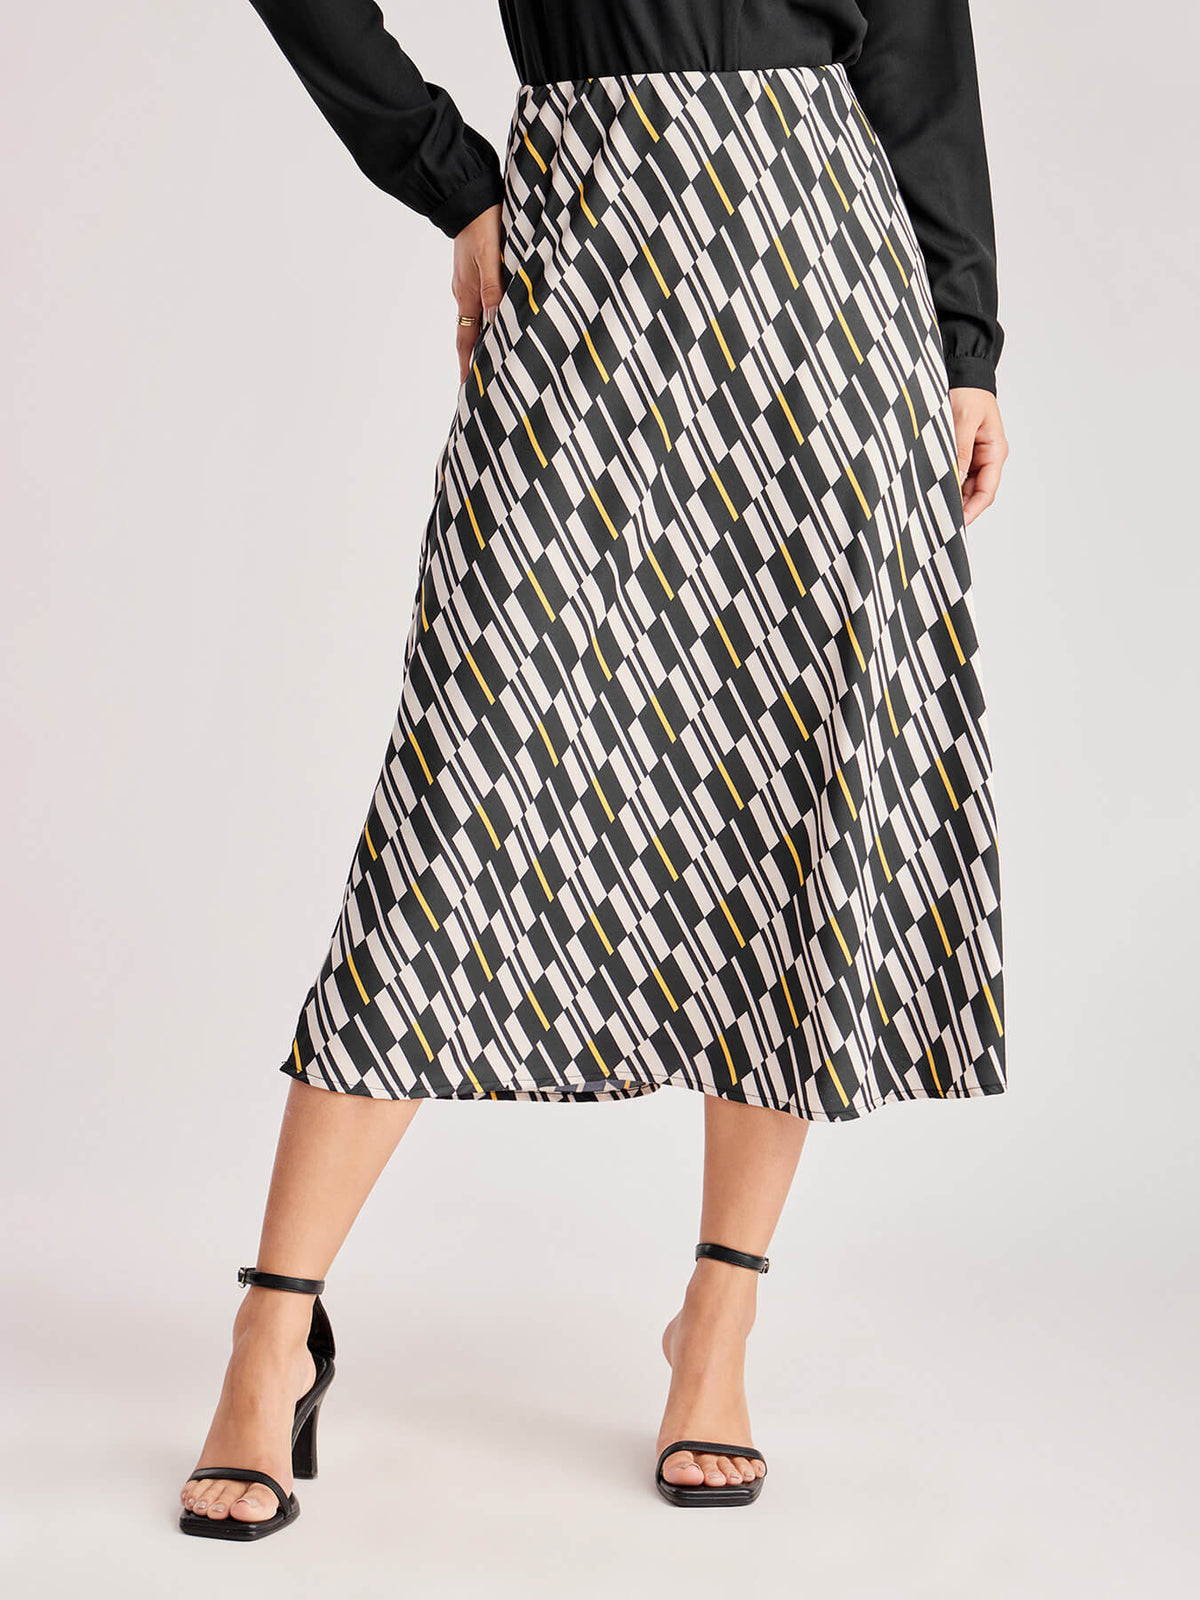 Geometric Print A-Line Skirt - Black And Off White